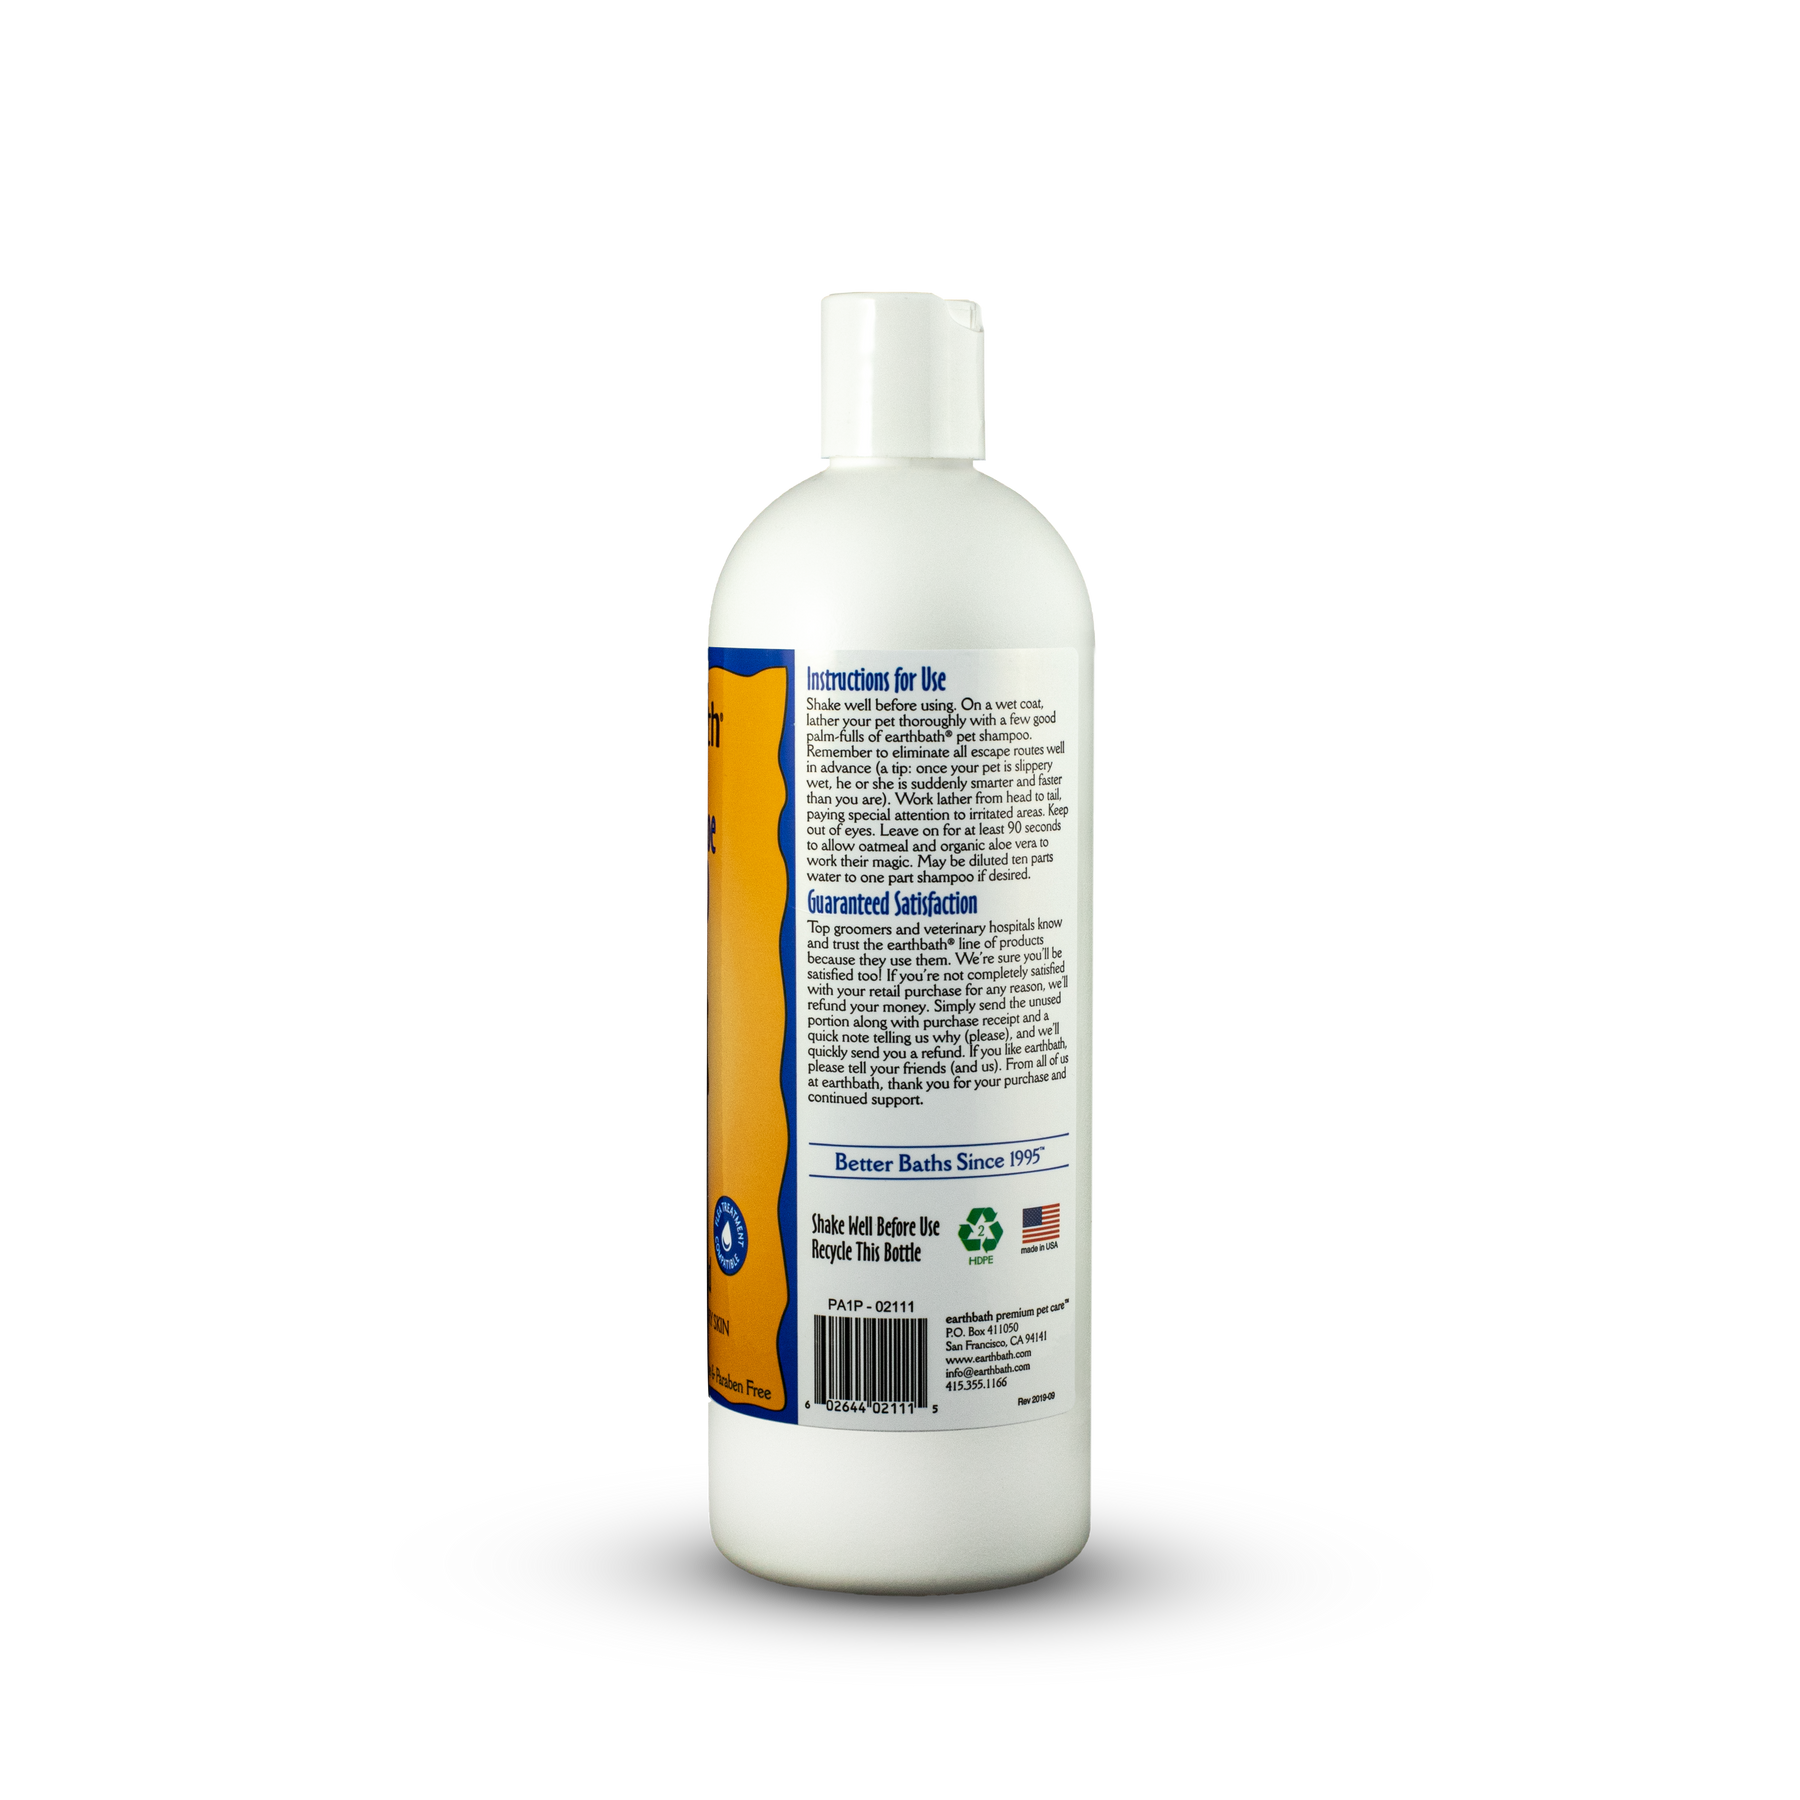 earthbath® Oatmeal & Aloe Shampoo, Vanilla & Almond, Helps Relieve Itchy Dry Skin, Made in USA, 16 oz